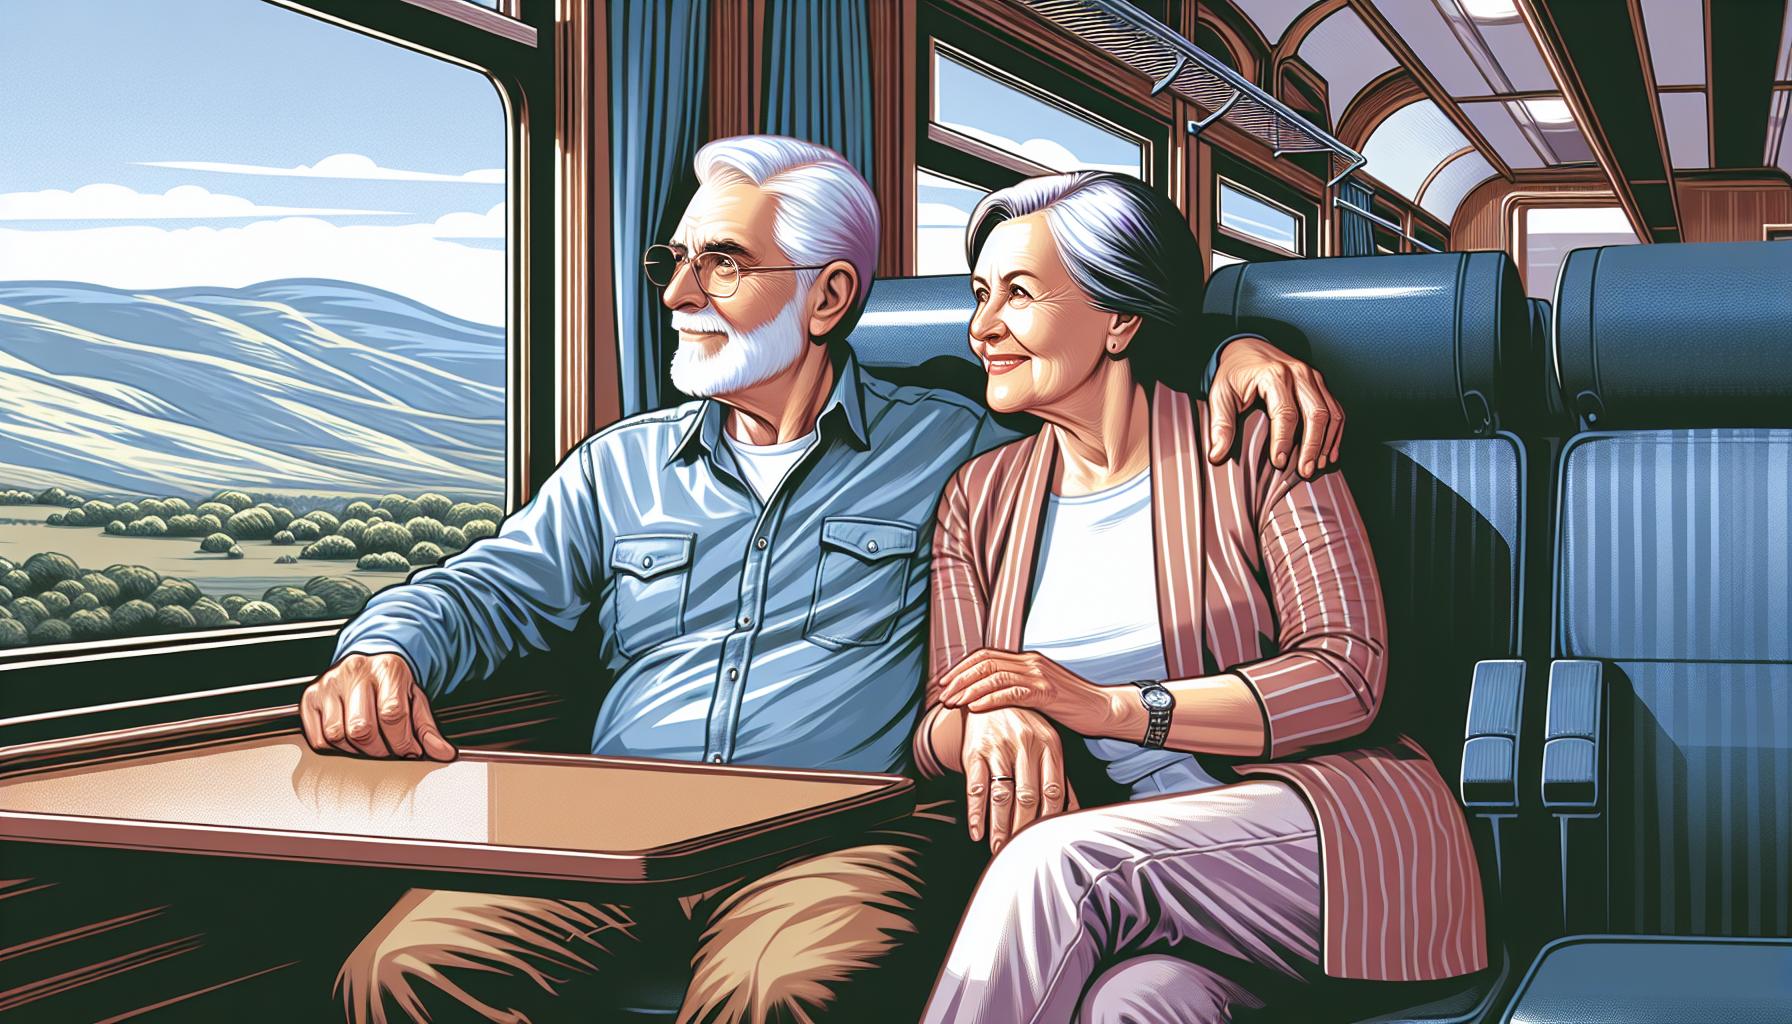 senior rail travel in europe